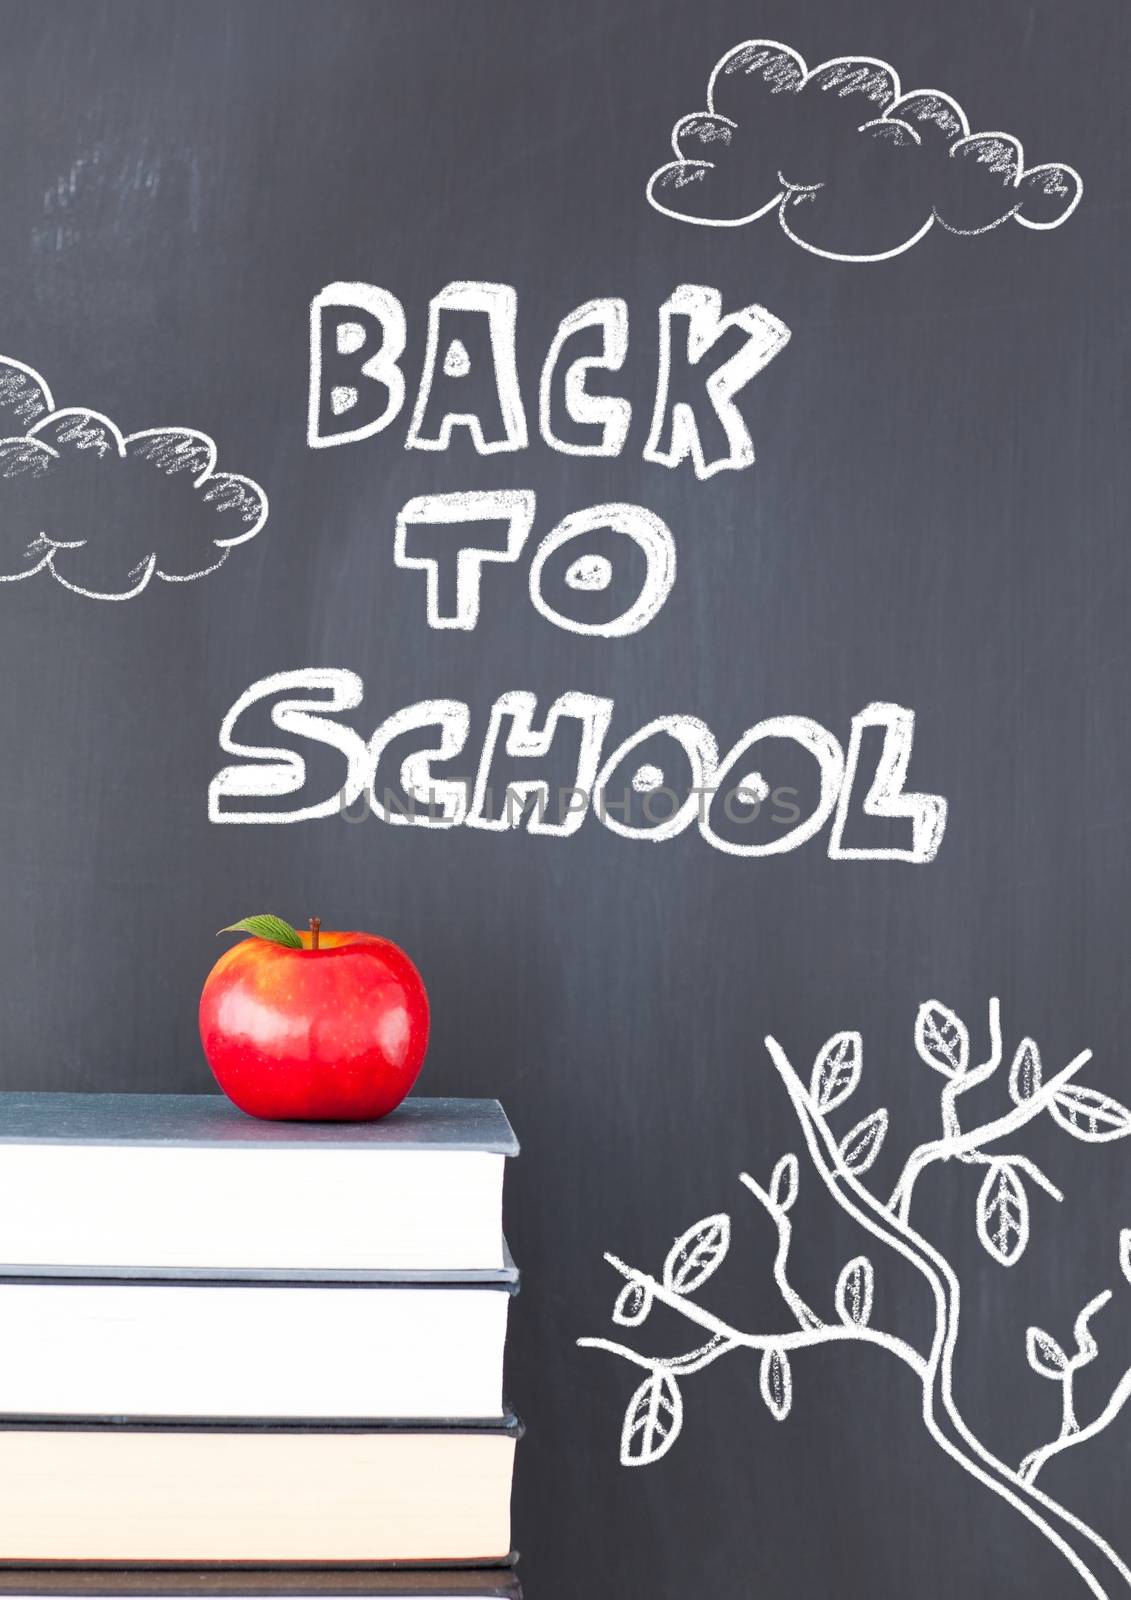 Back to school Education drawing on blackboard with apple by Wavebreakmedia